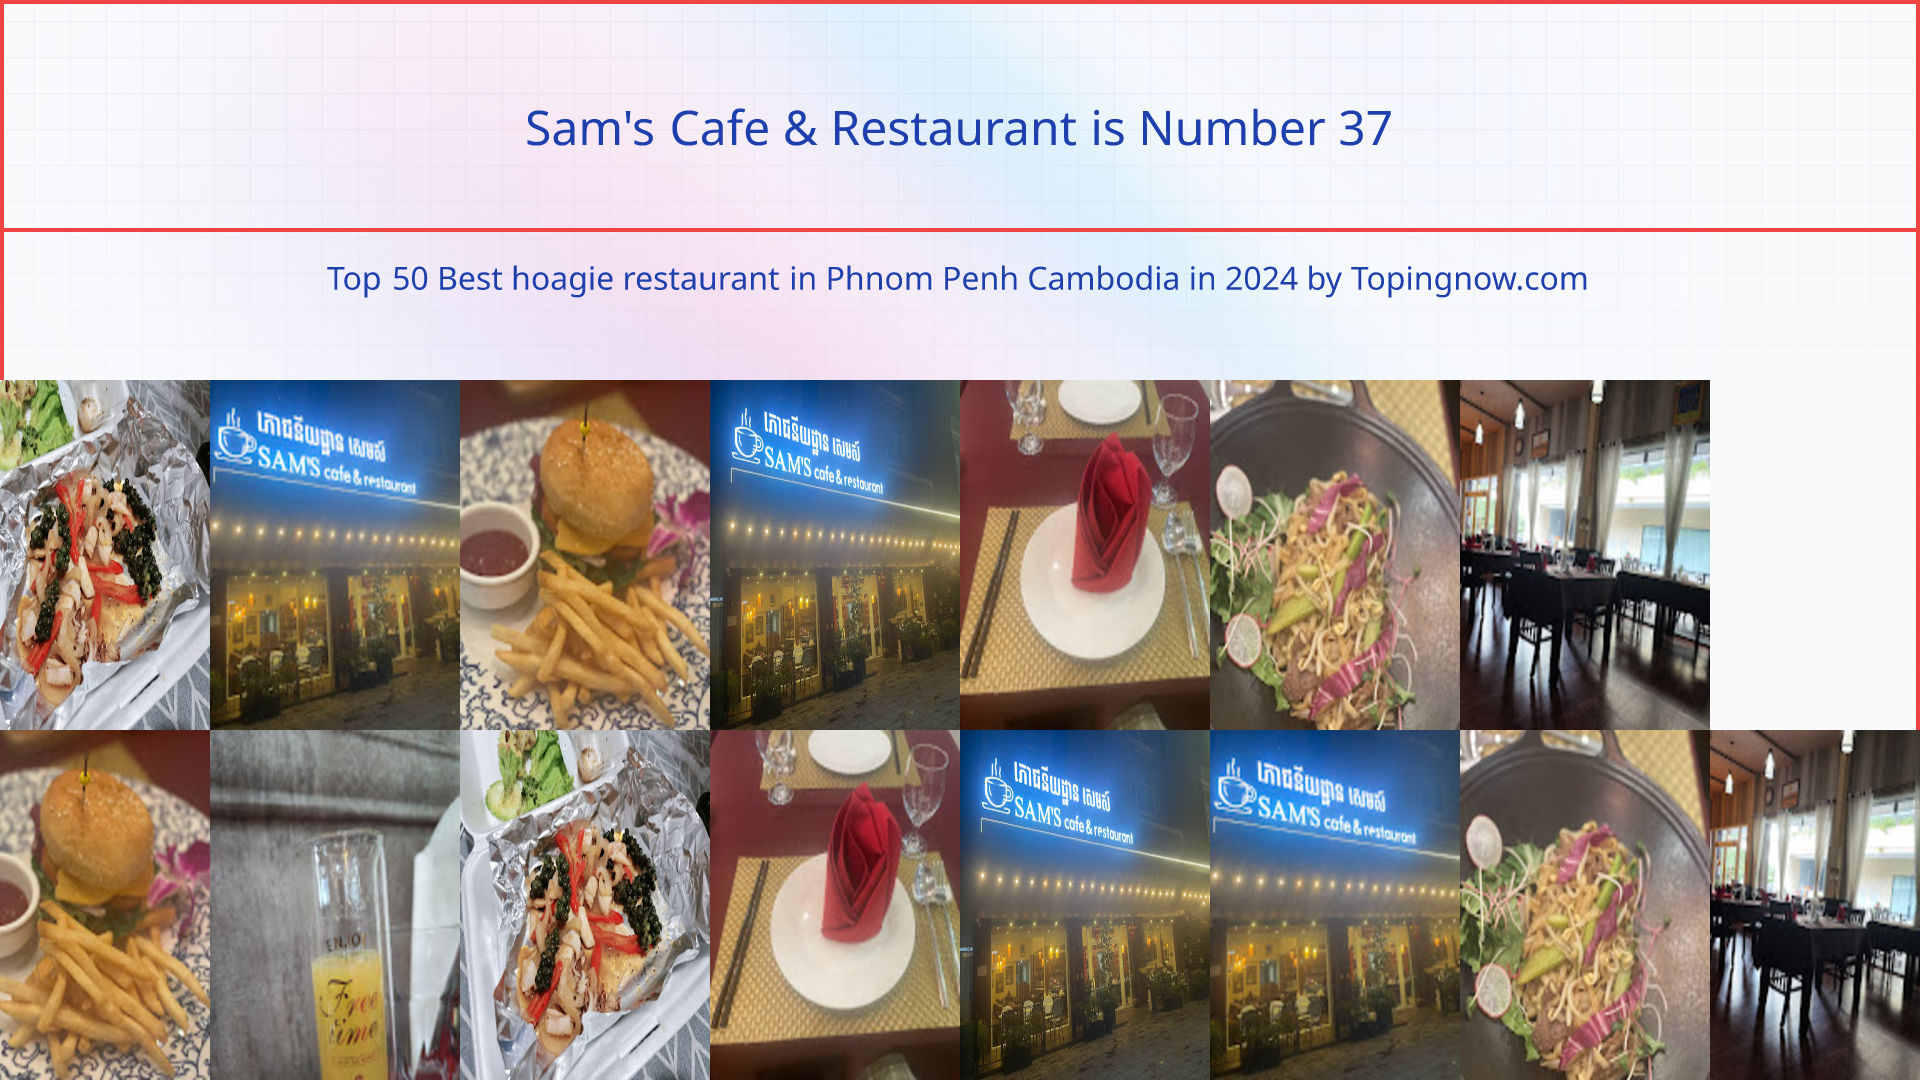 Sam's Cafe & Restaurant: Top 50 Best hoagie restaurant in Phnom Penh Cambodia in 2024